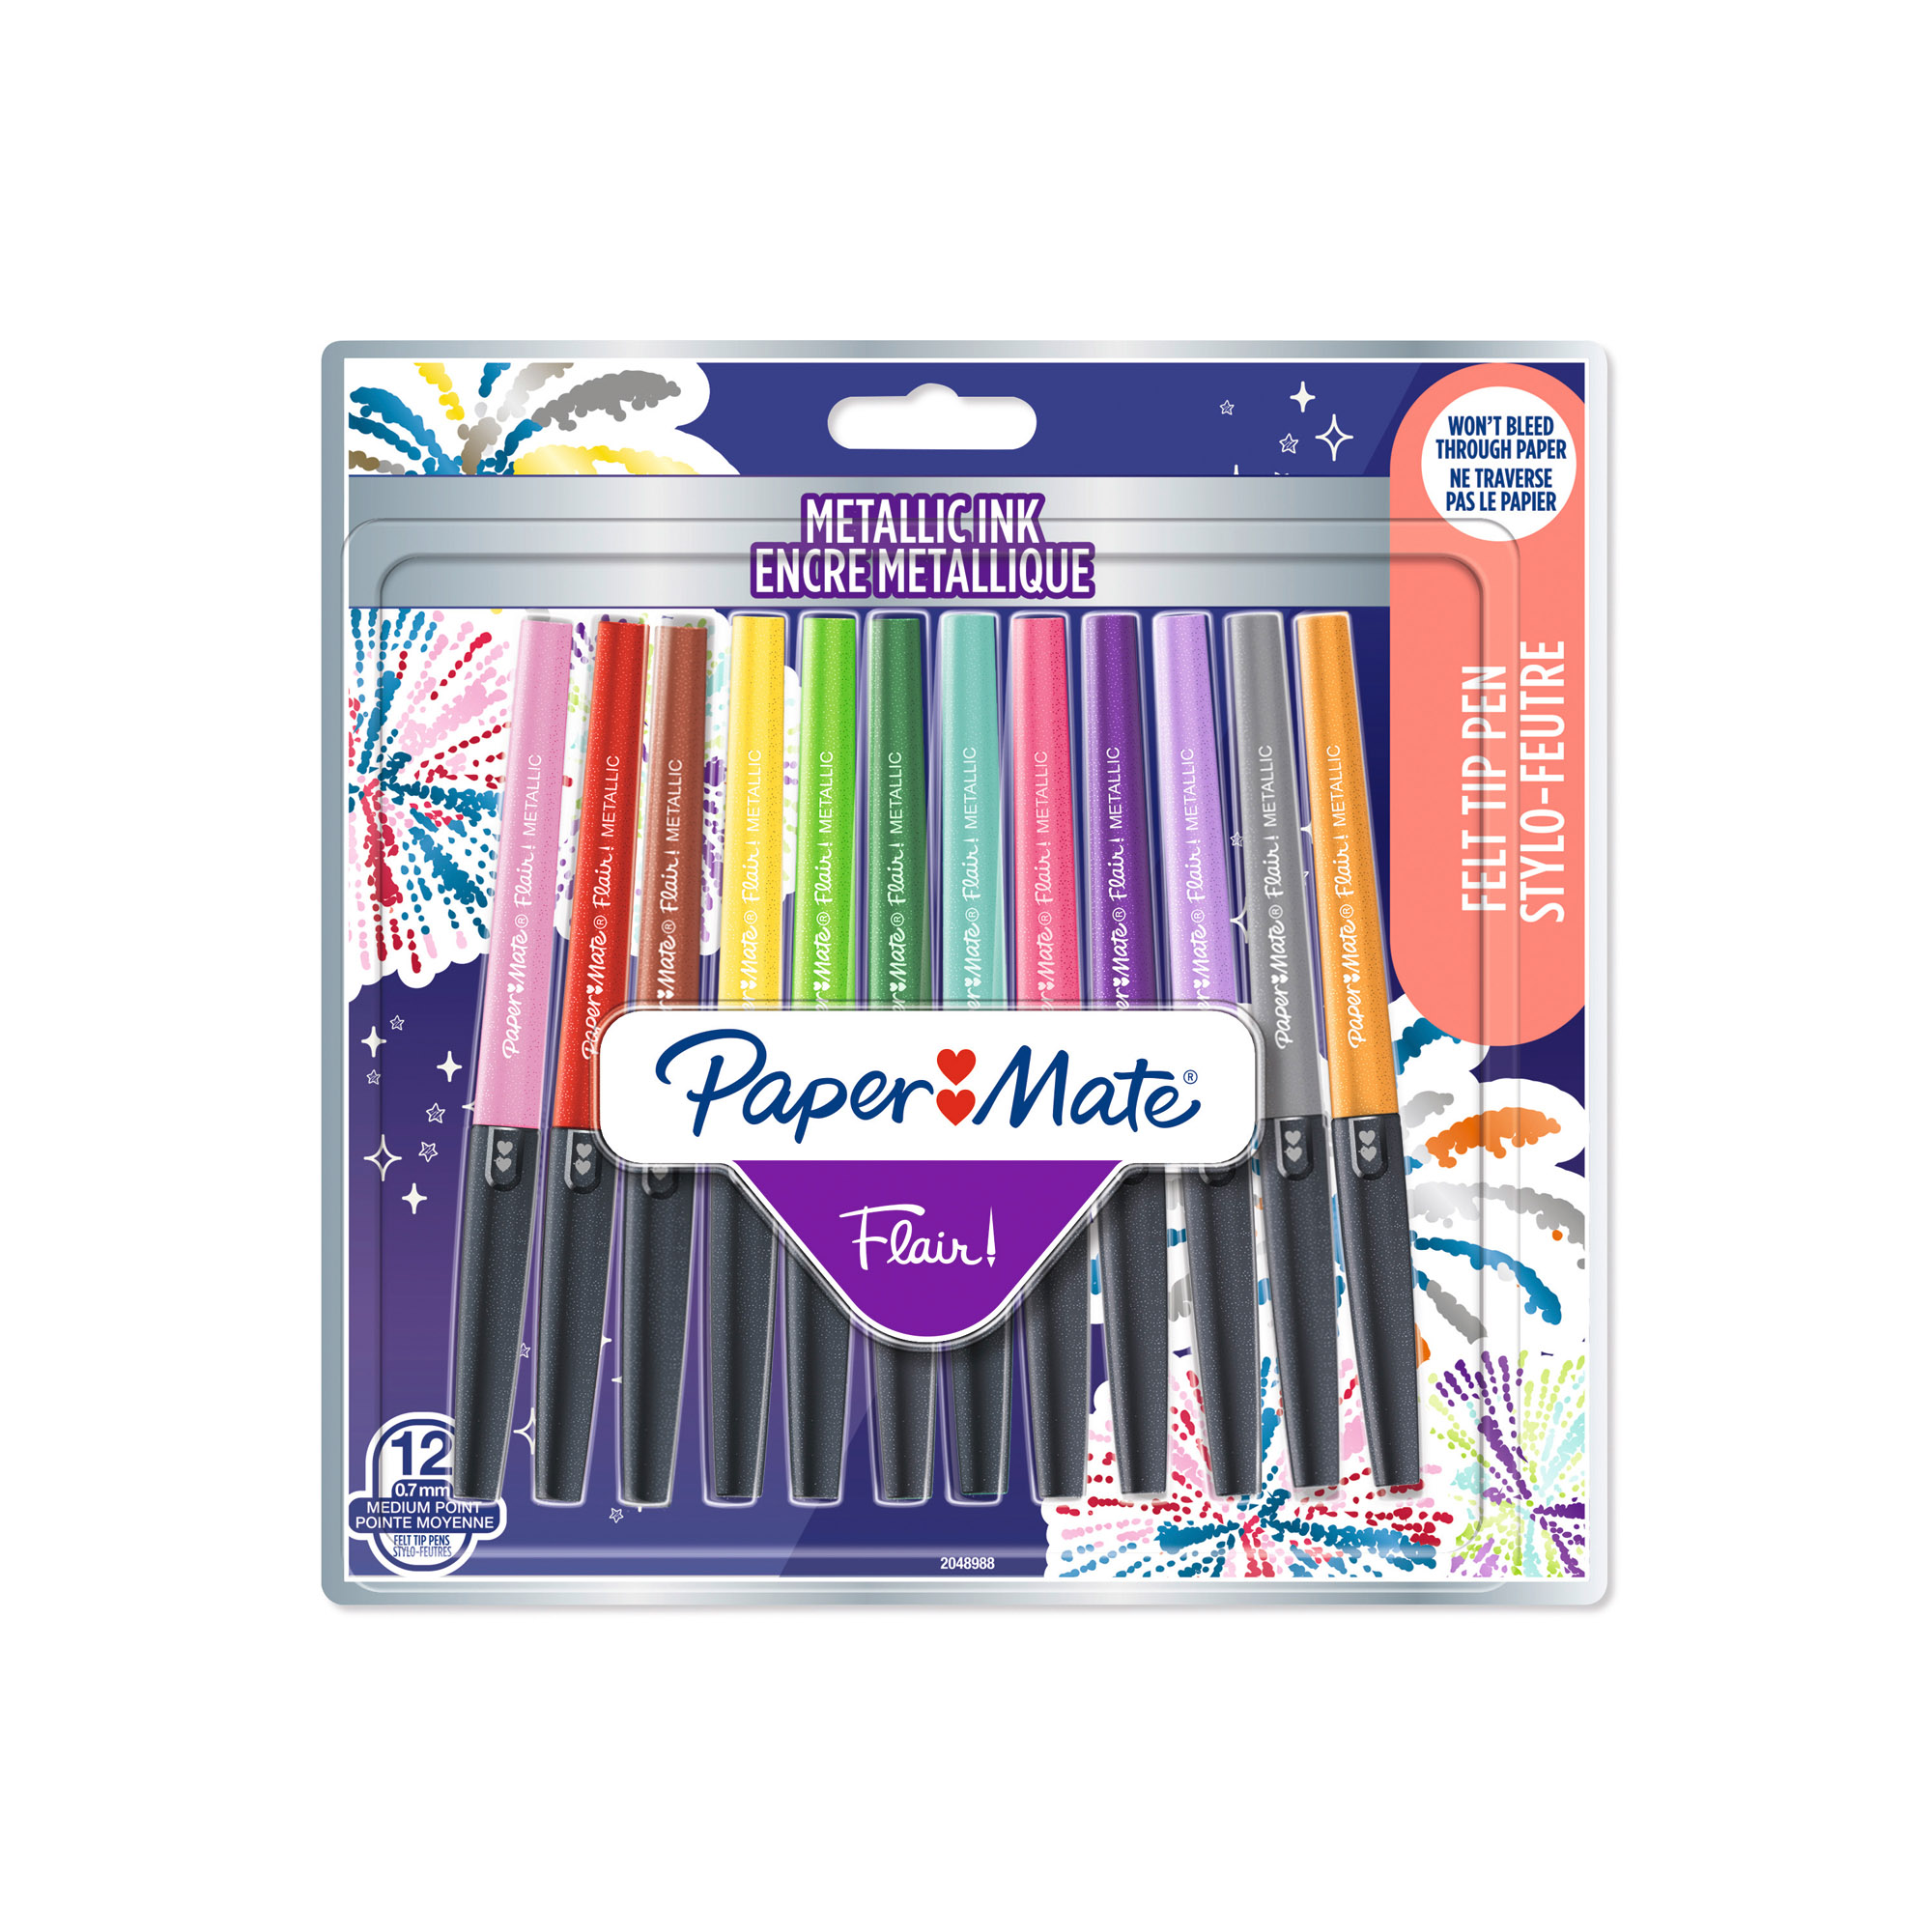 STABILO Lot de 25 stylos-feutres Fineliner point 88 (Dessin)